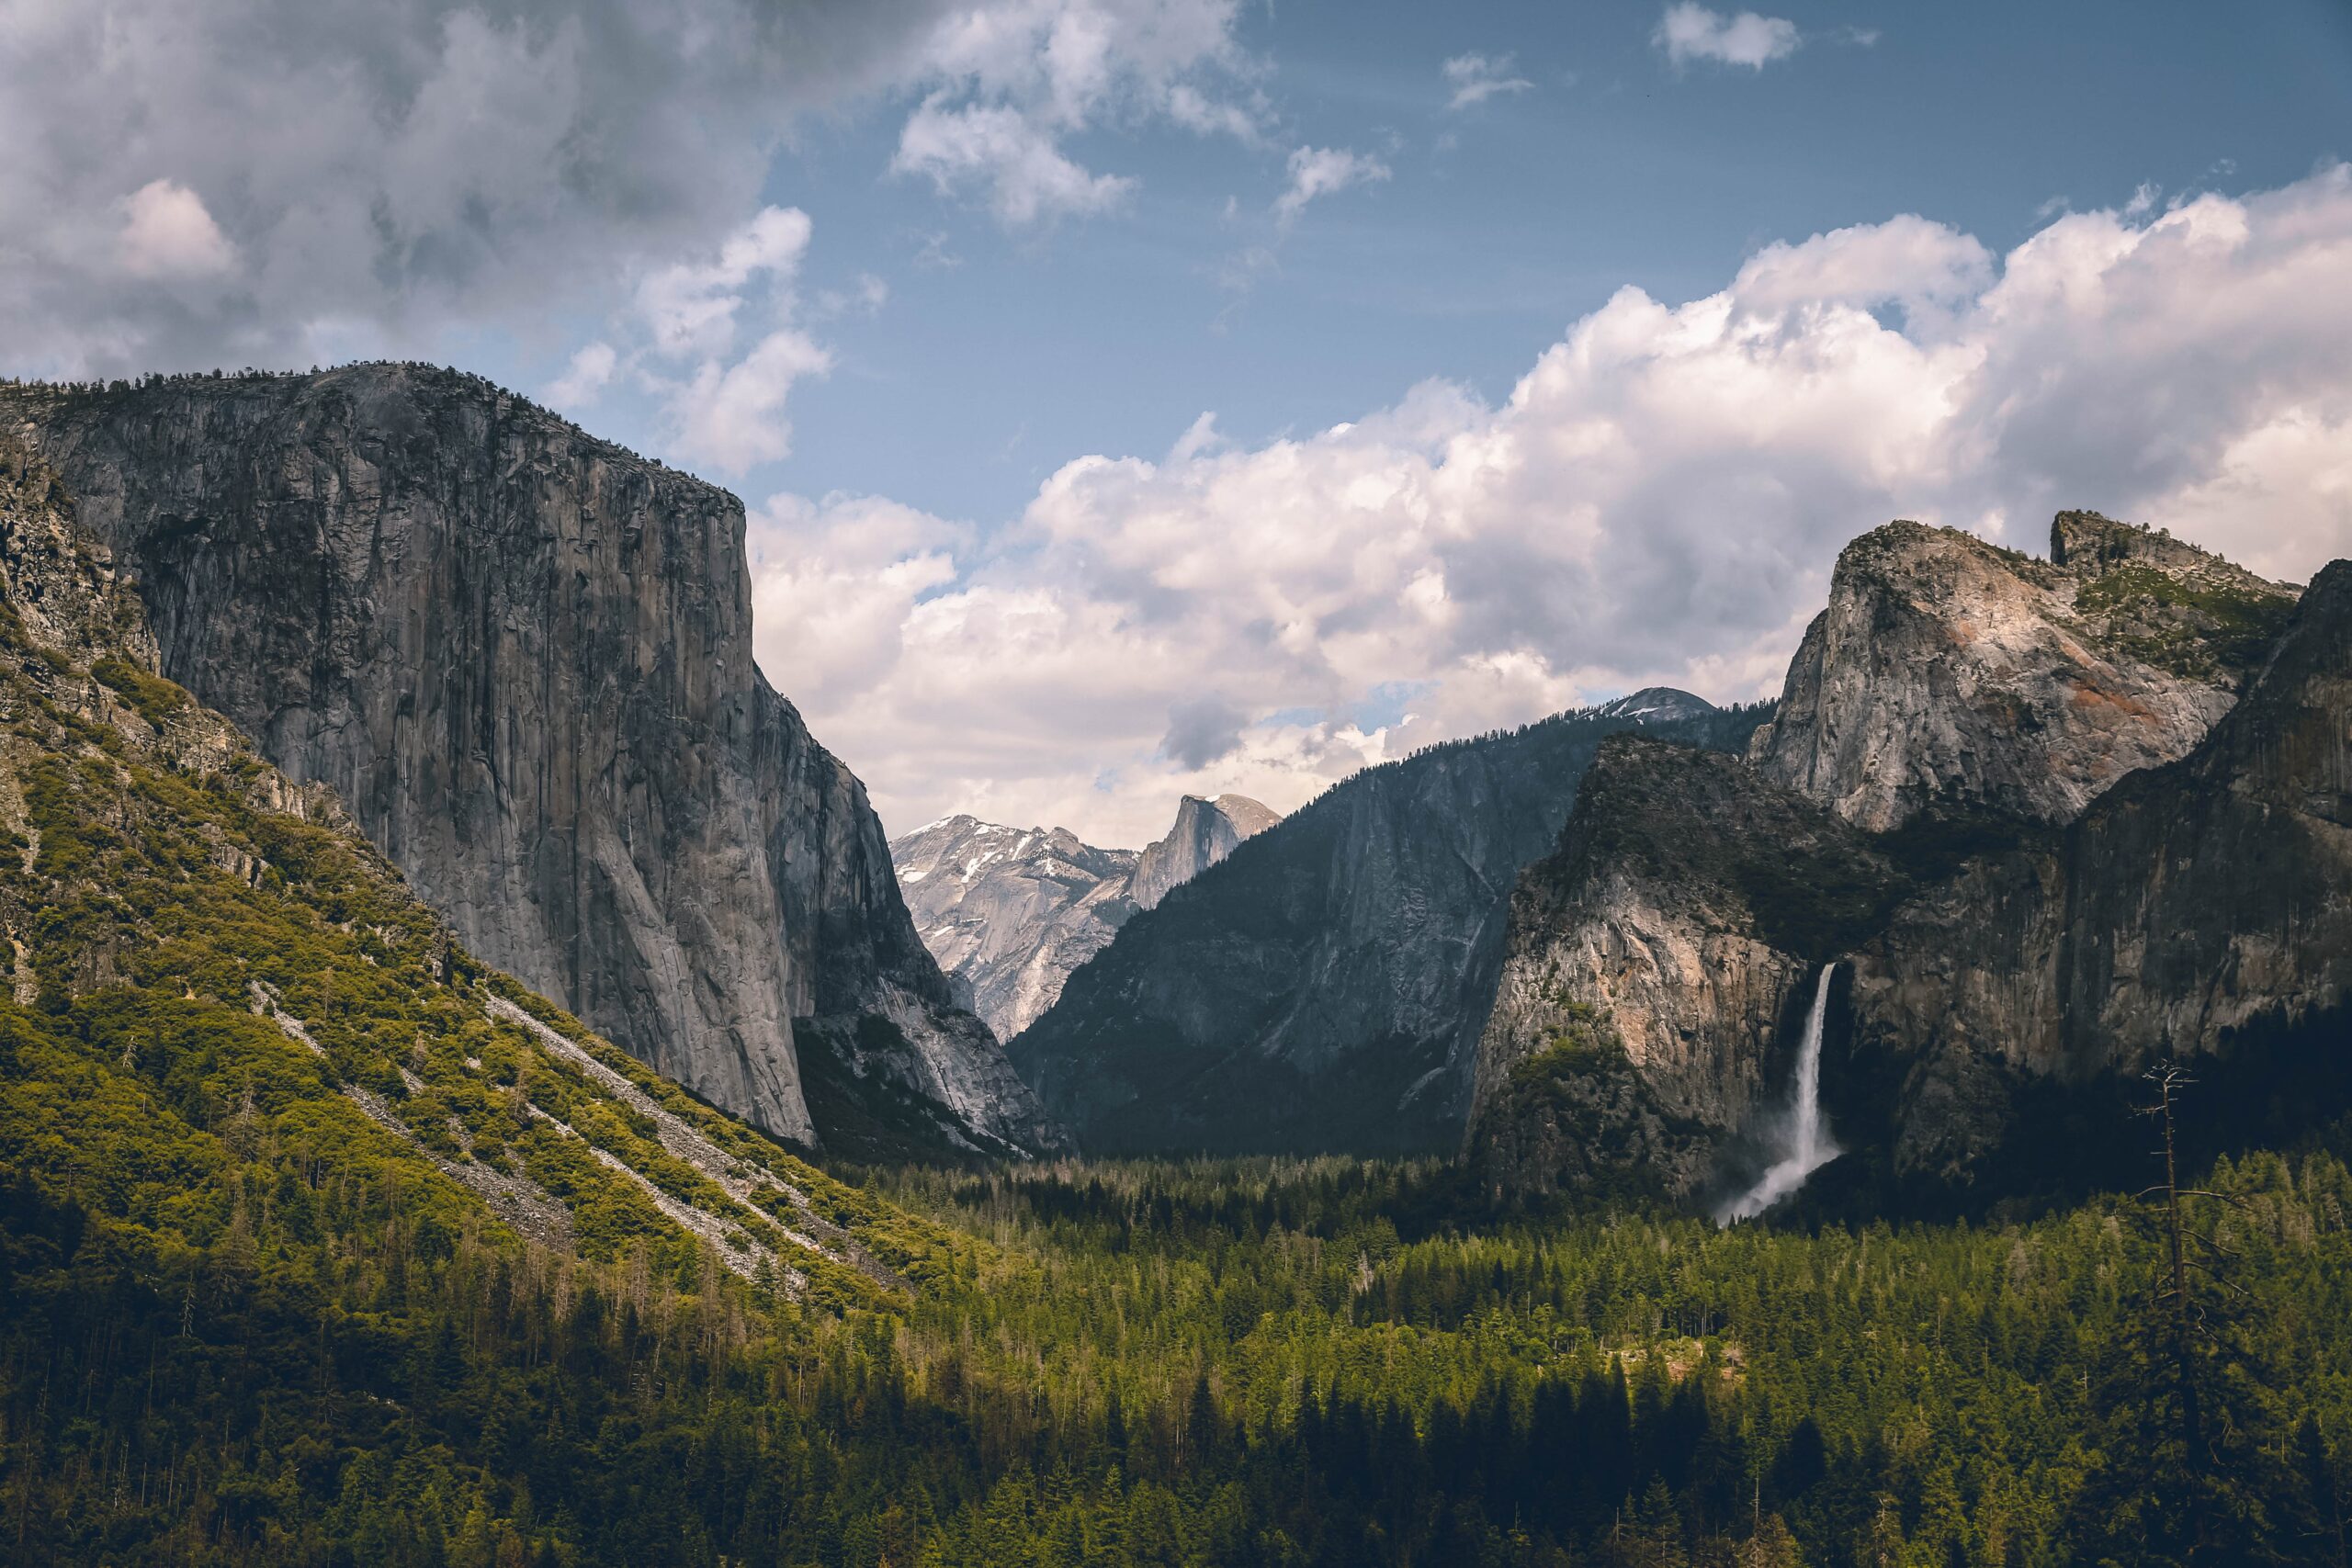 Essay | Pandora’s Matchbox: How colonialism and misunderstanding tarnished Yosemite